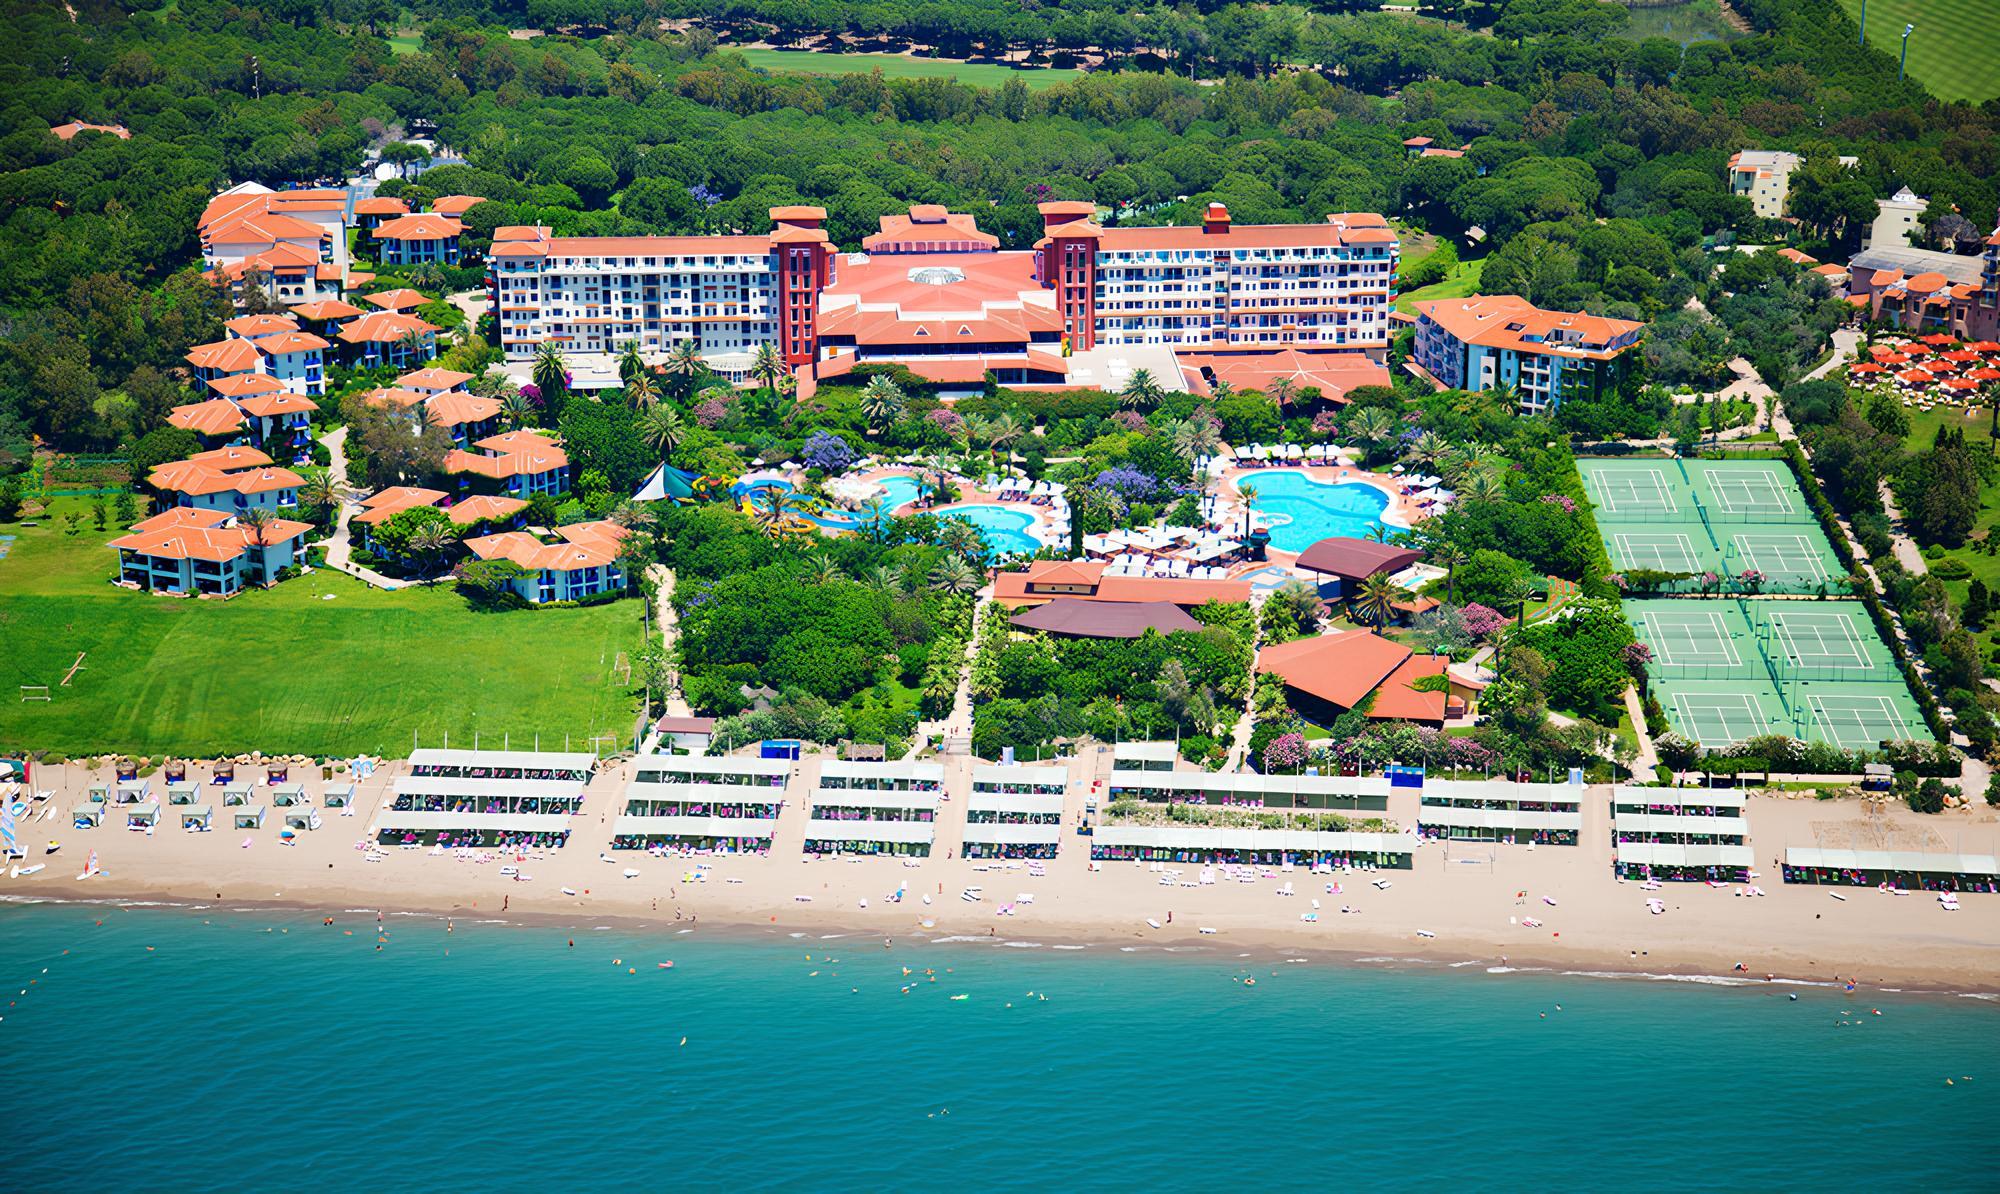 Belconti Resort Hotel 5*